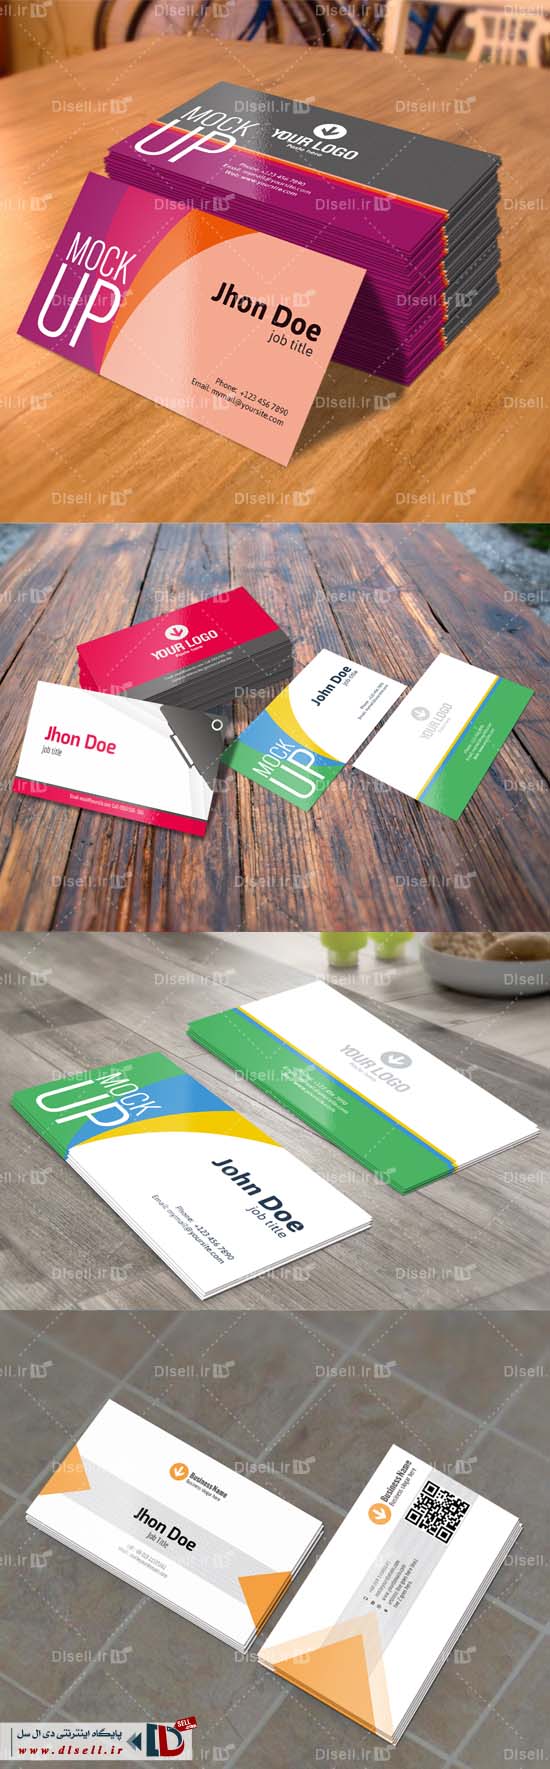 مجموعه 4 طرح موکاپ و پیش نمایش کارت ویزیت - شماره 6 Business Card Mockup